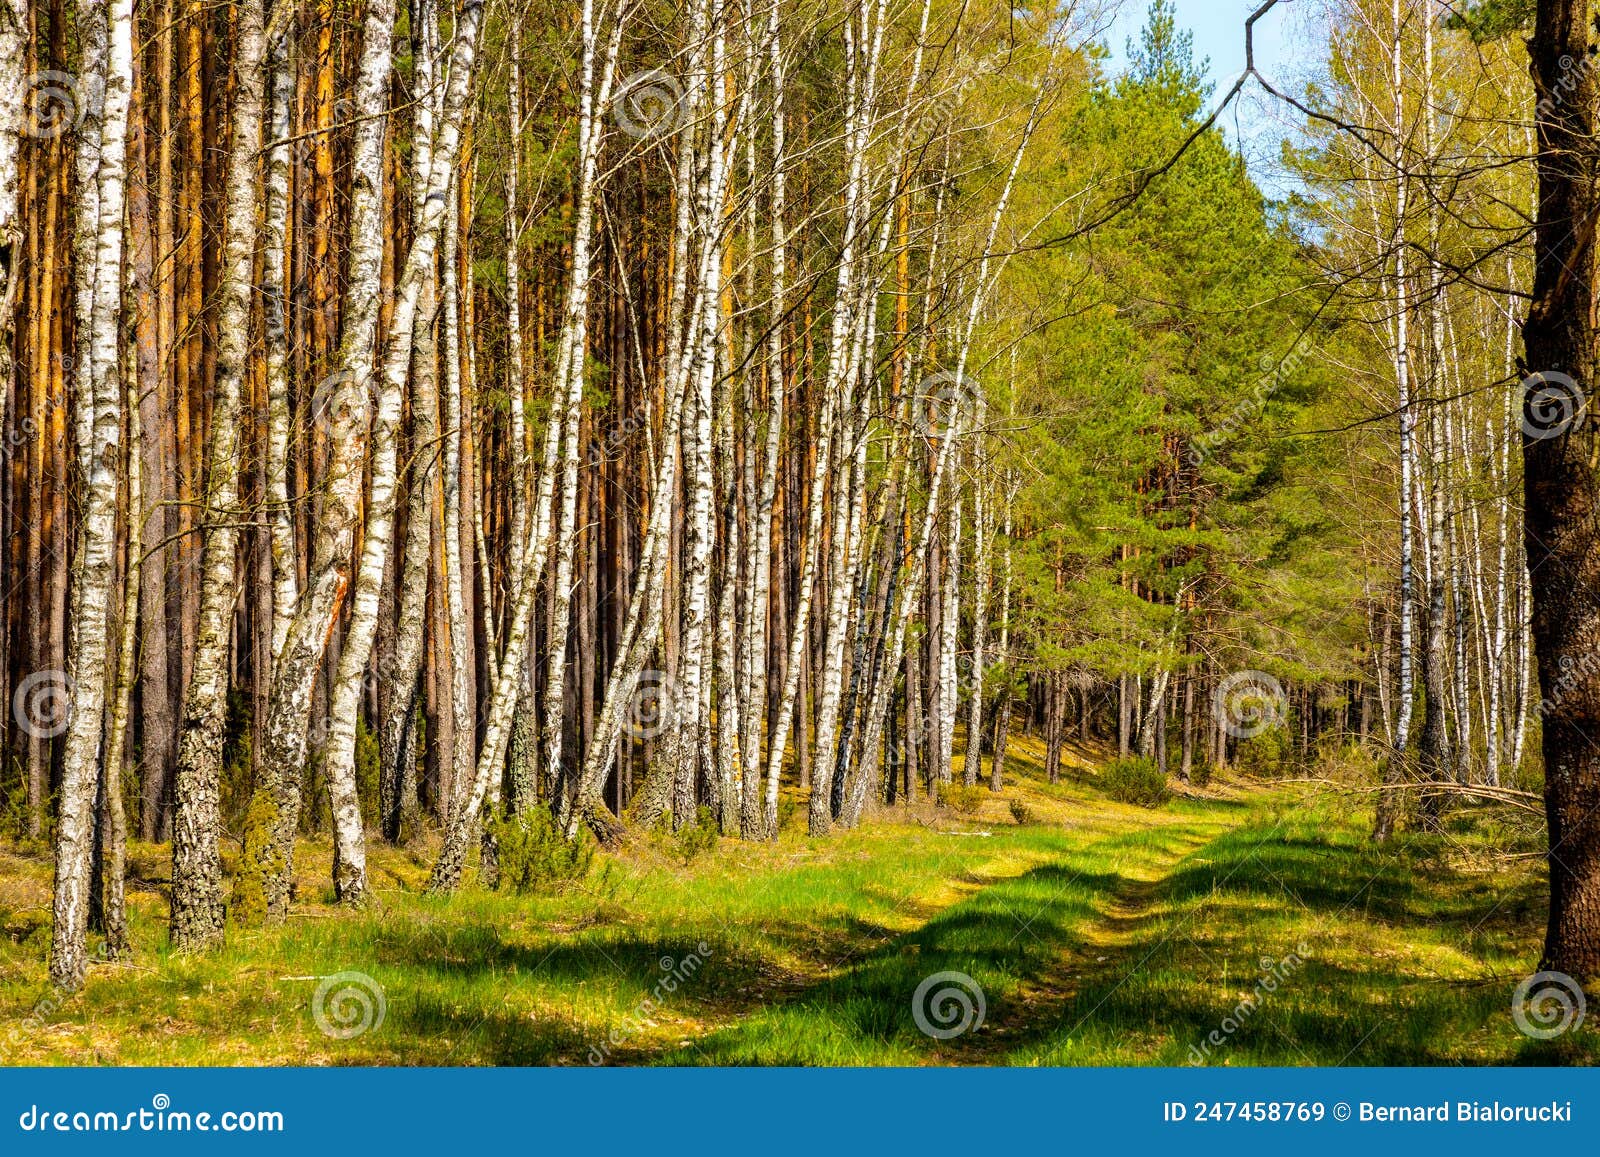 birch forest of biebrza river bird wildlife reserve during spring nesting period aside carska droga in poland